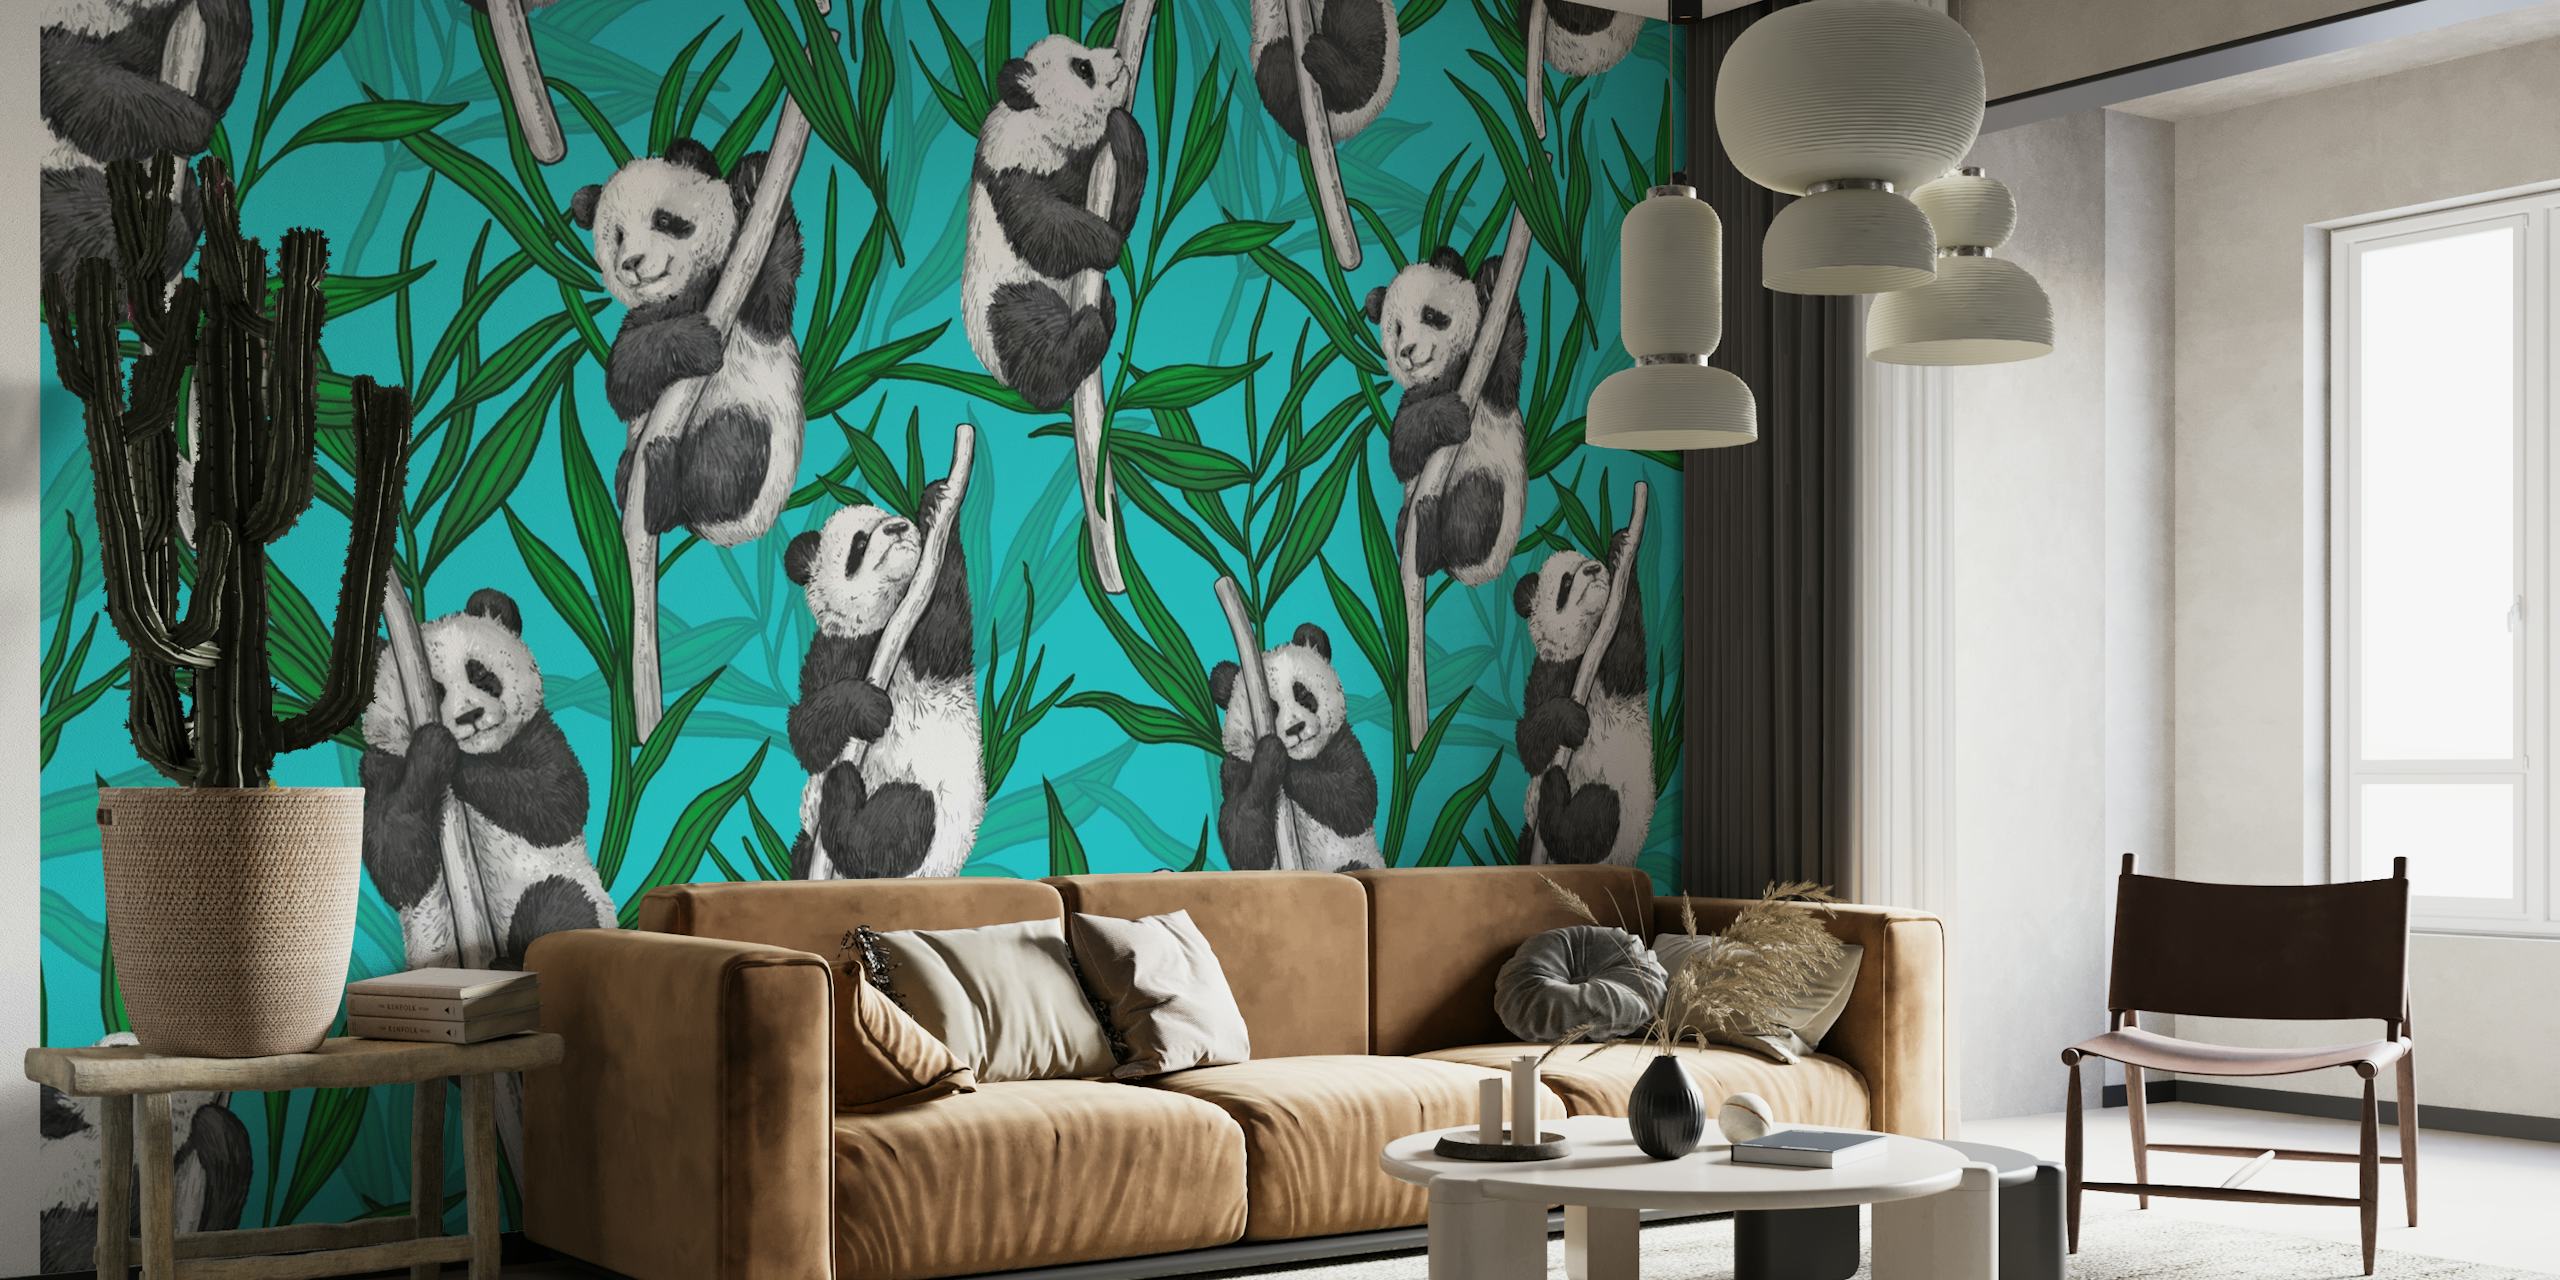 Panda cubs wallpaper